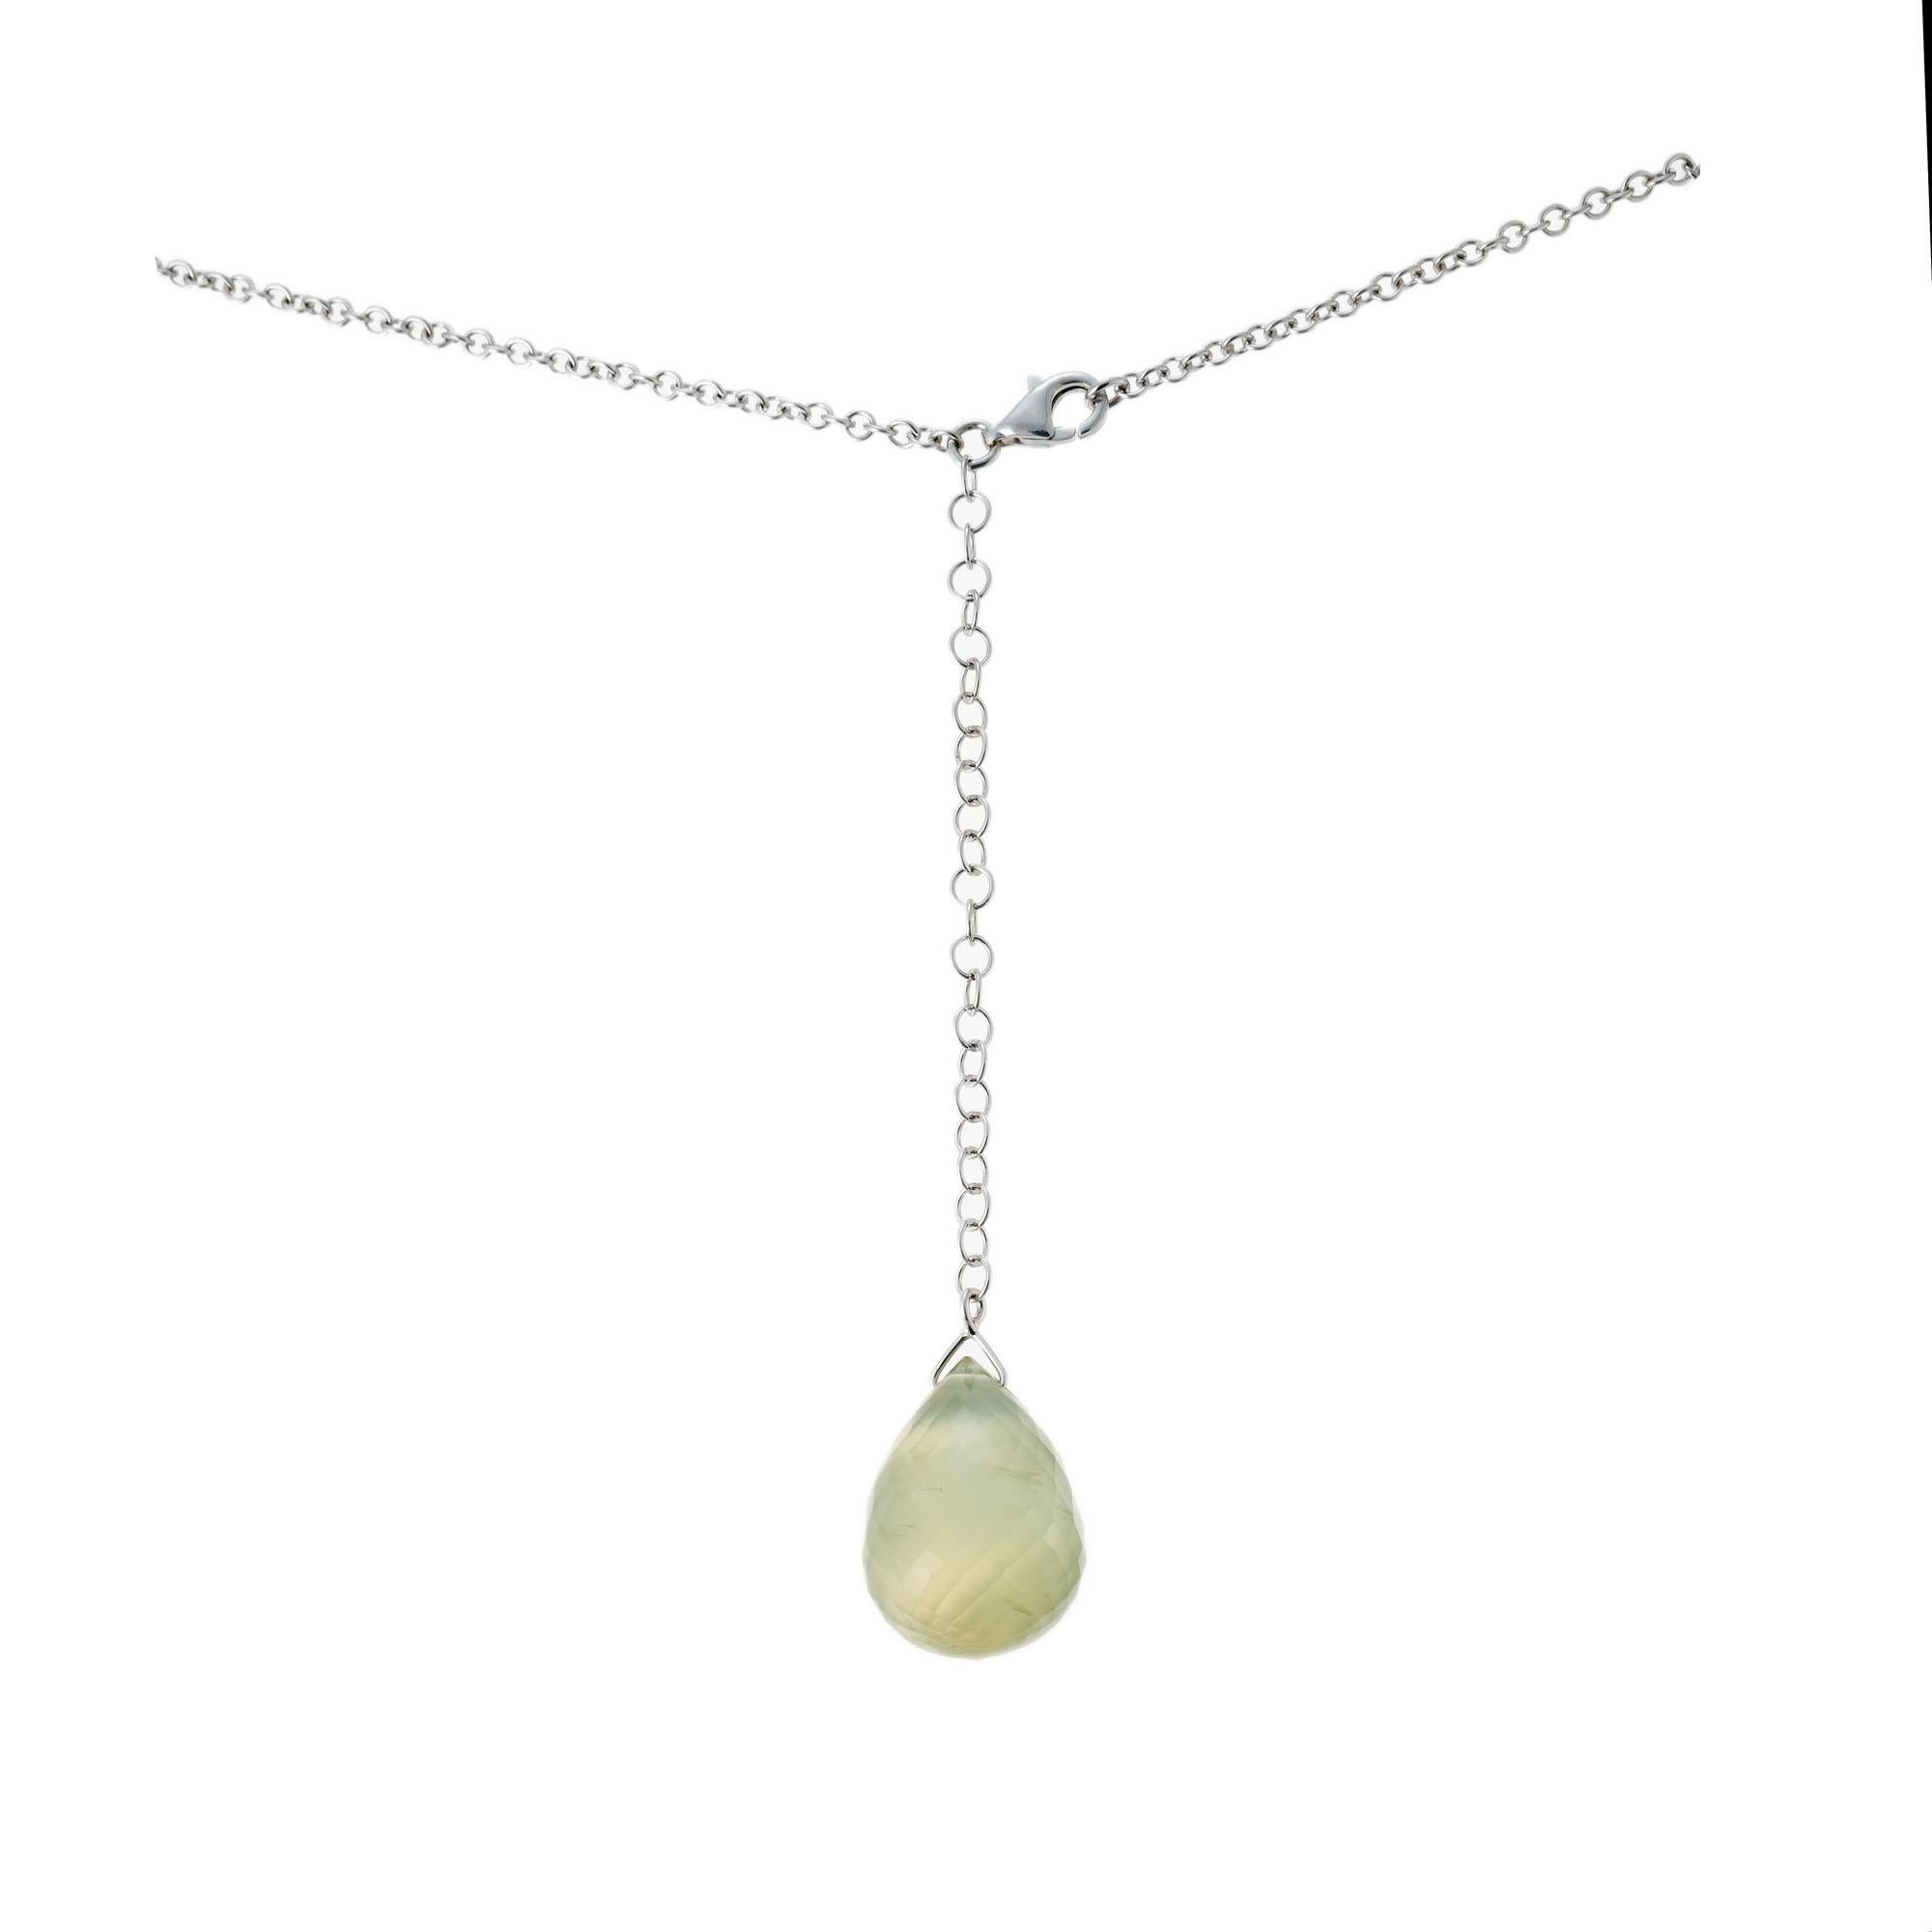 70.26 Carat Colored Briolette Quartz Citrine Bead Gold Pendant Necklace In Excellent Condition For Sale In Stamford, CT